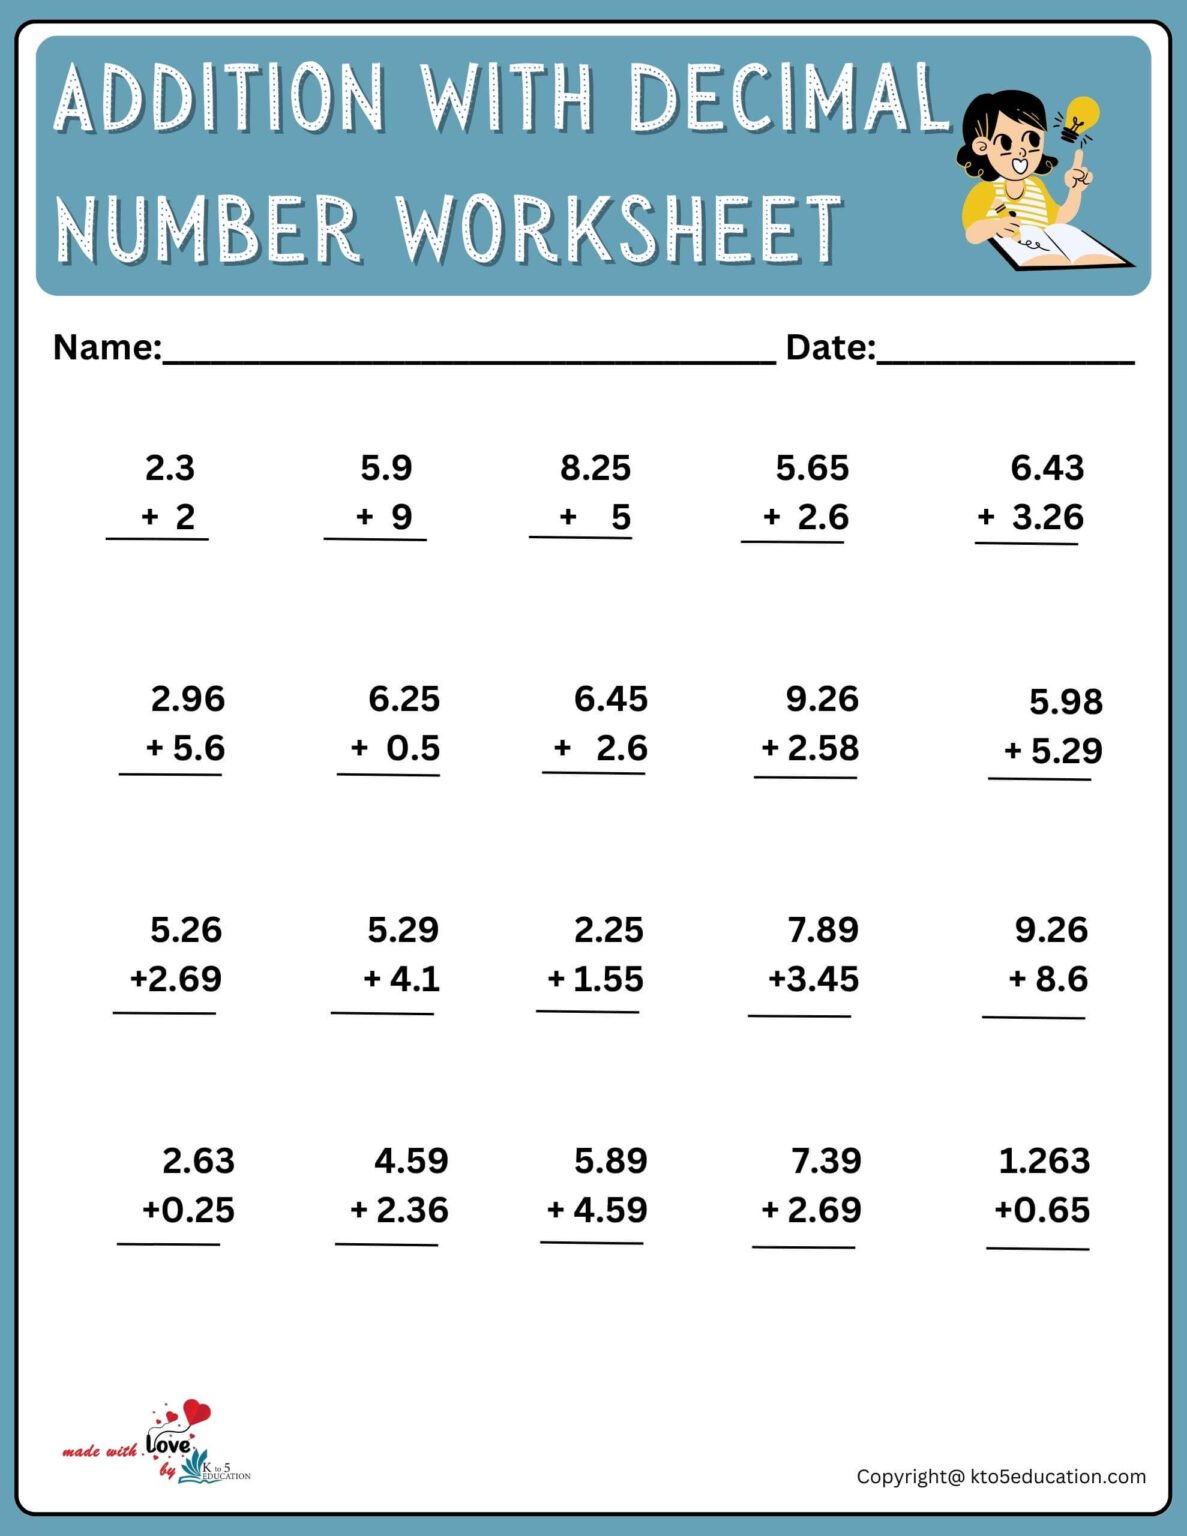 addition-of-decimal-numbers-worksheet-free-download